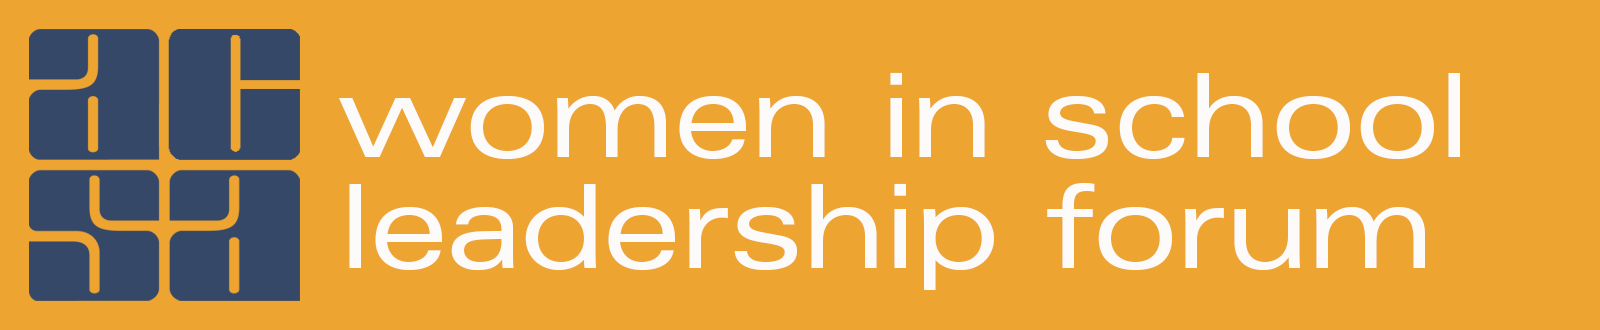 ACSA's Women in School Leadership Forum.